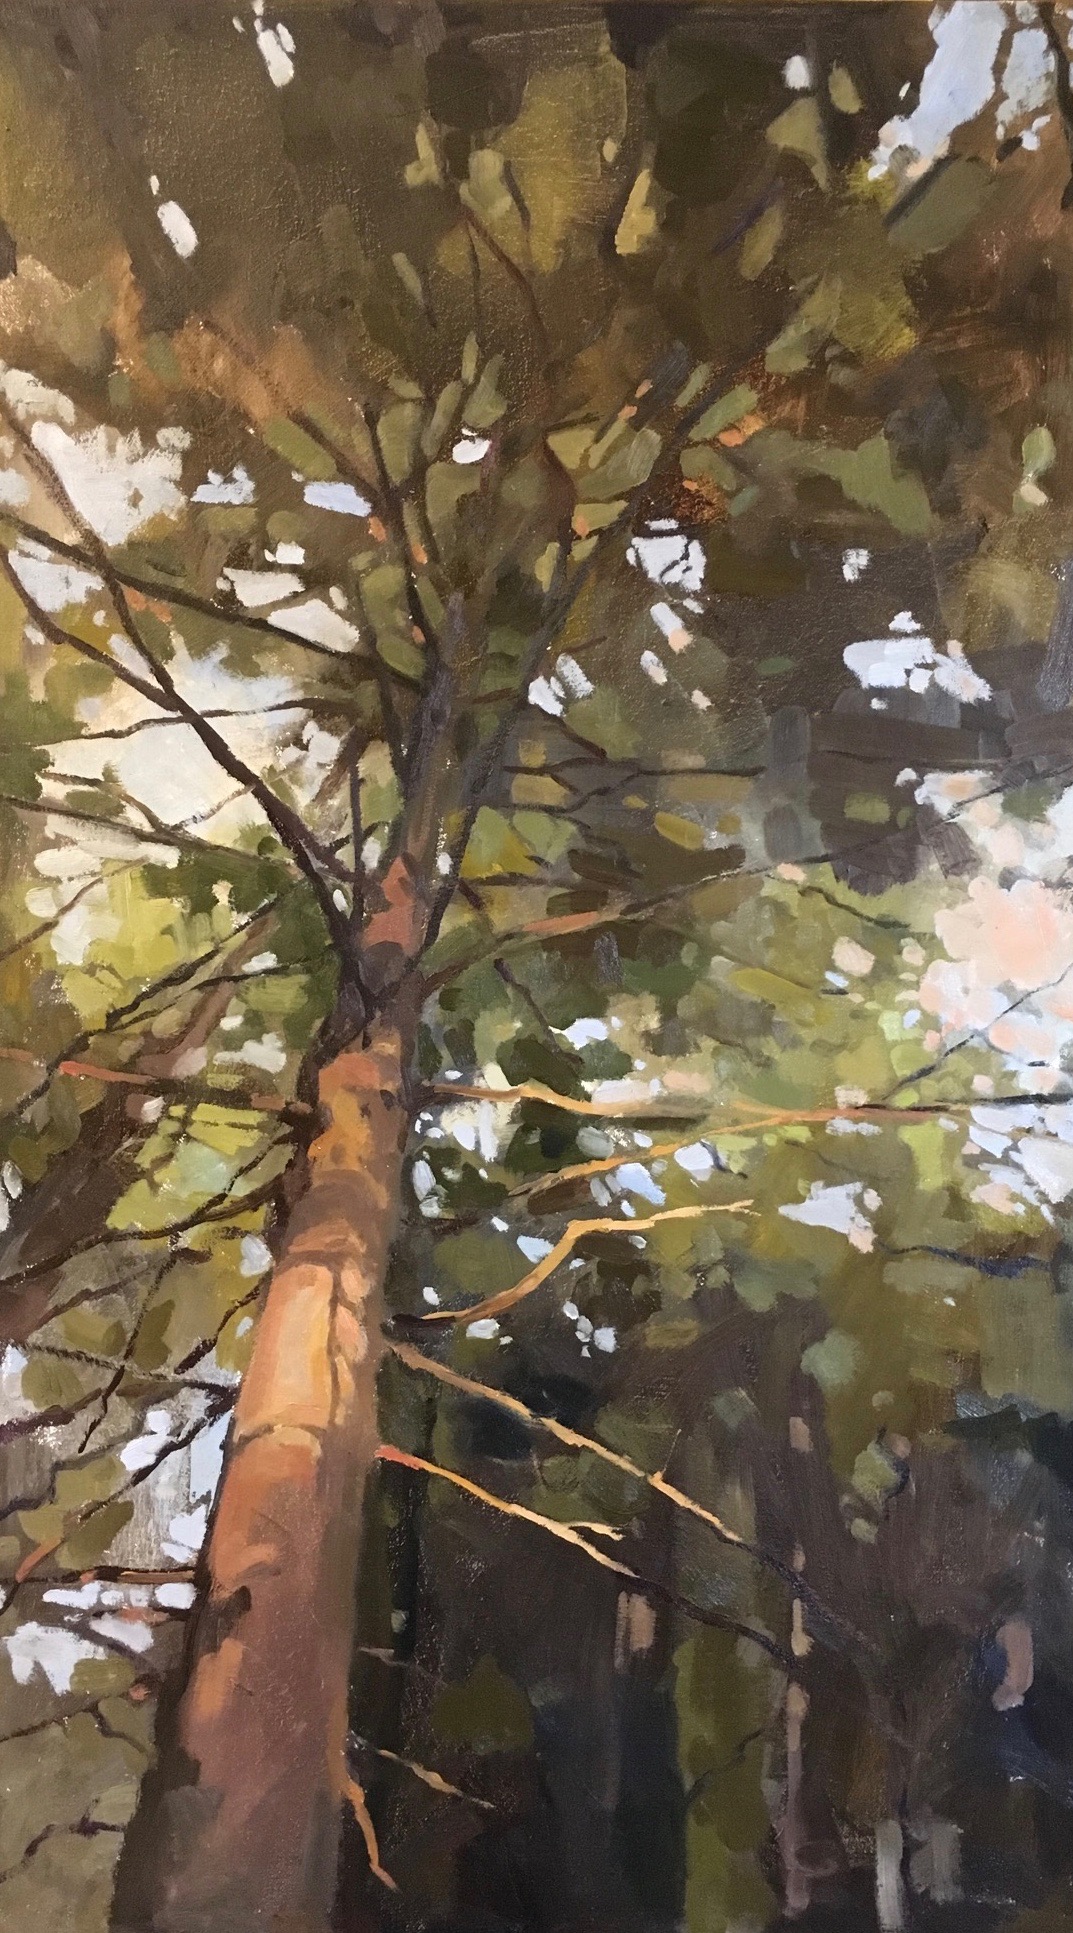 Warren, Oil on canvas, 16x28”, 2016